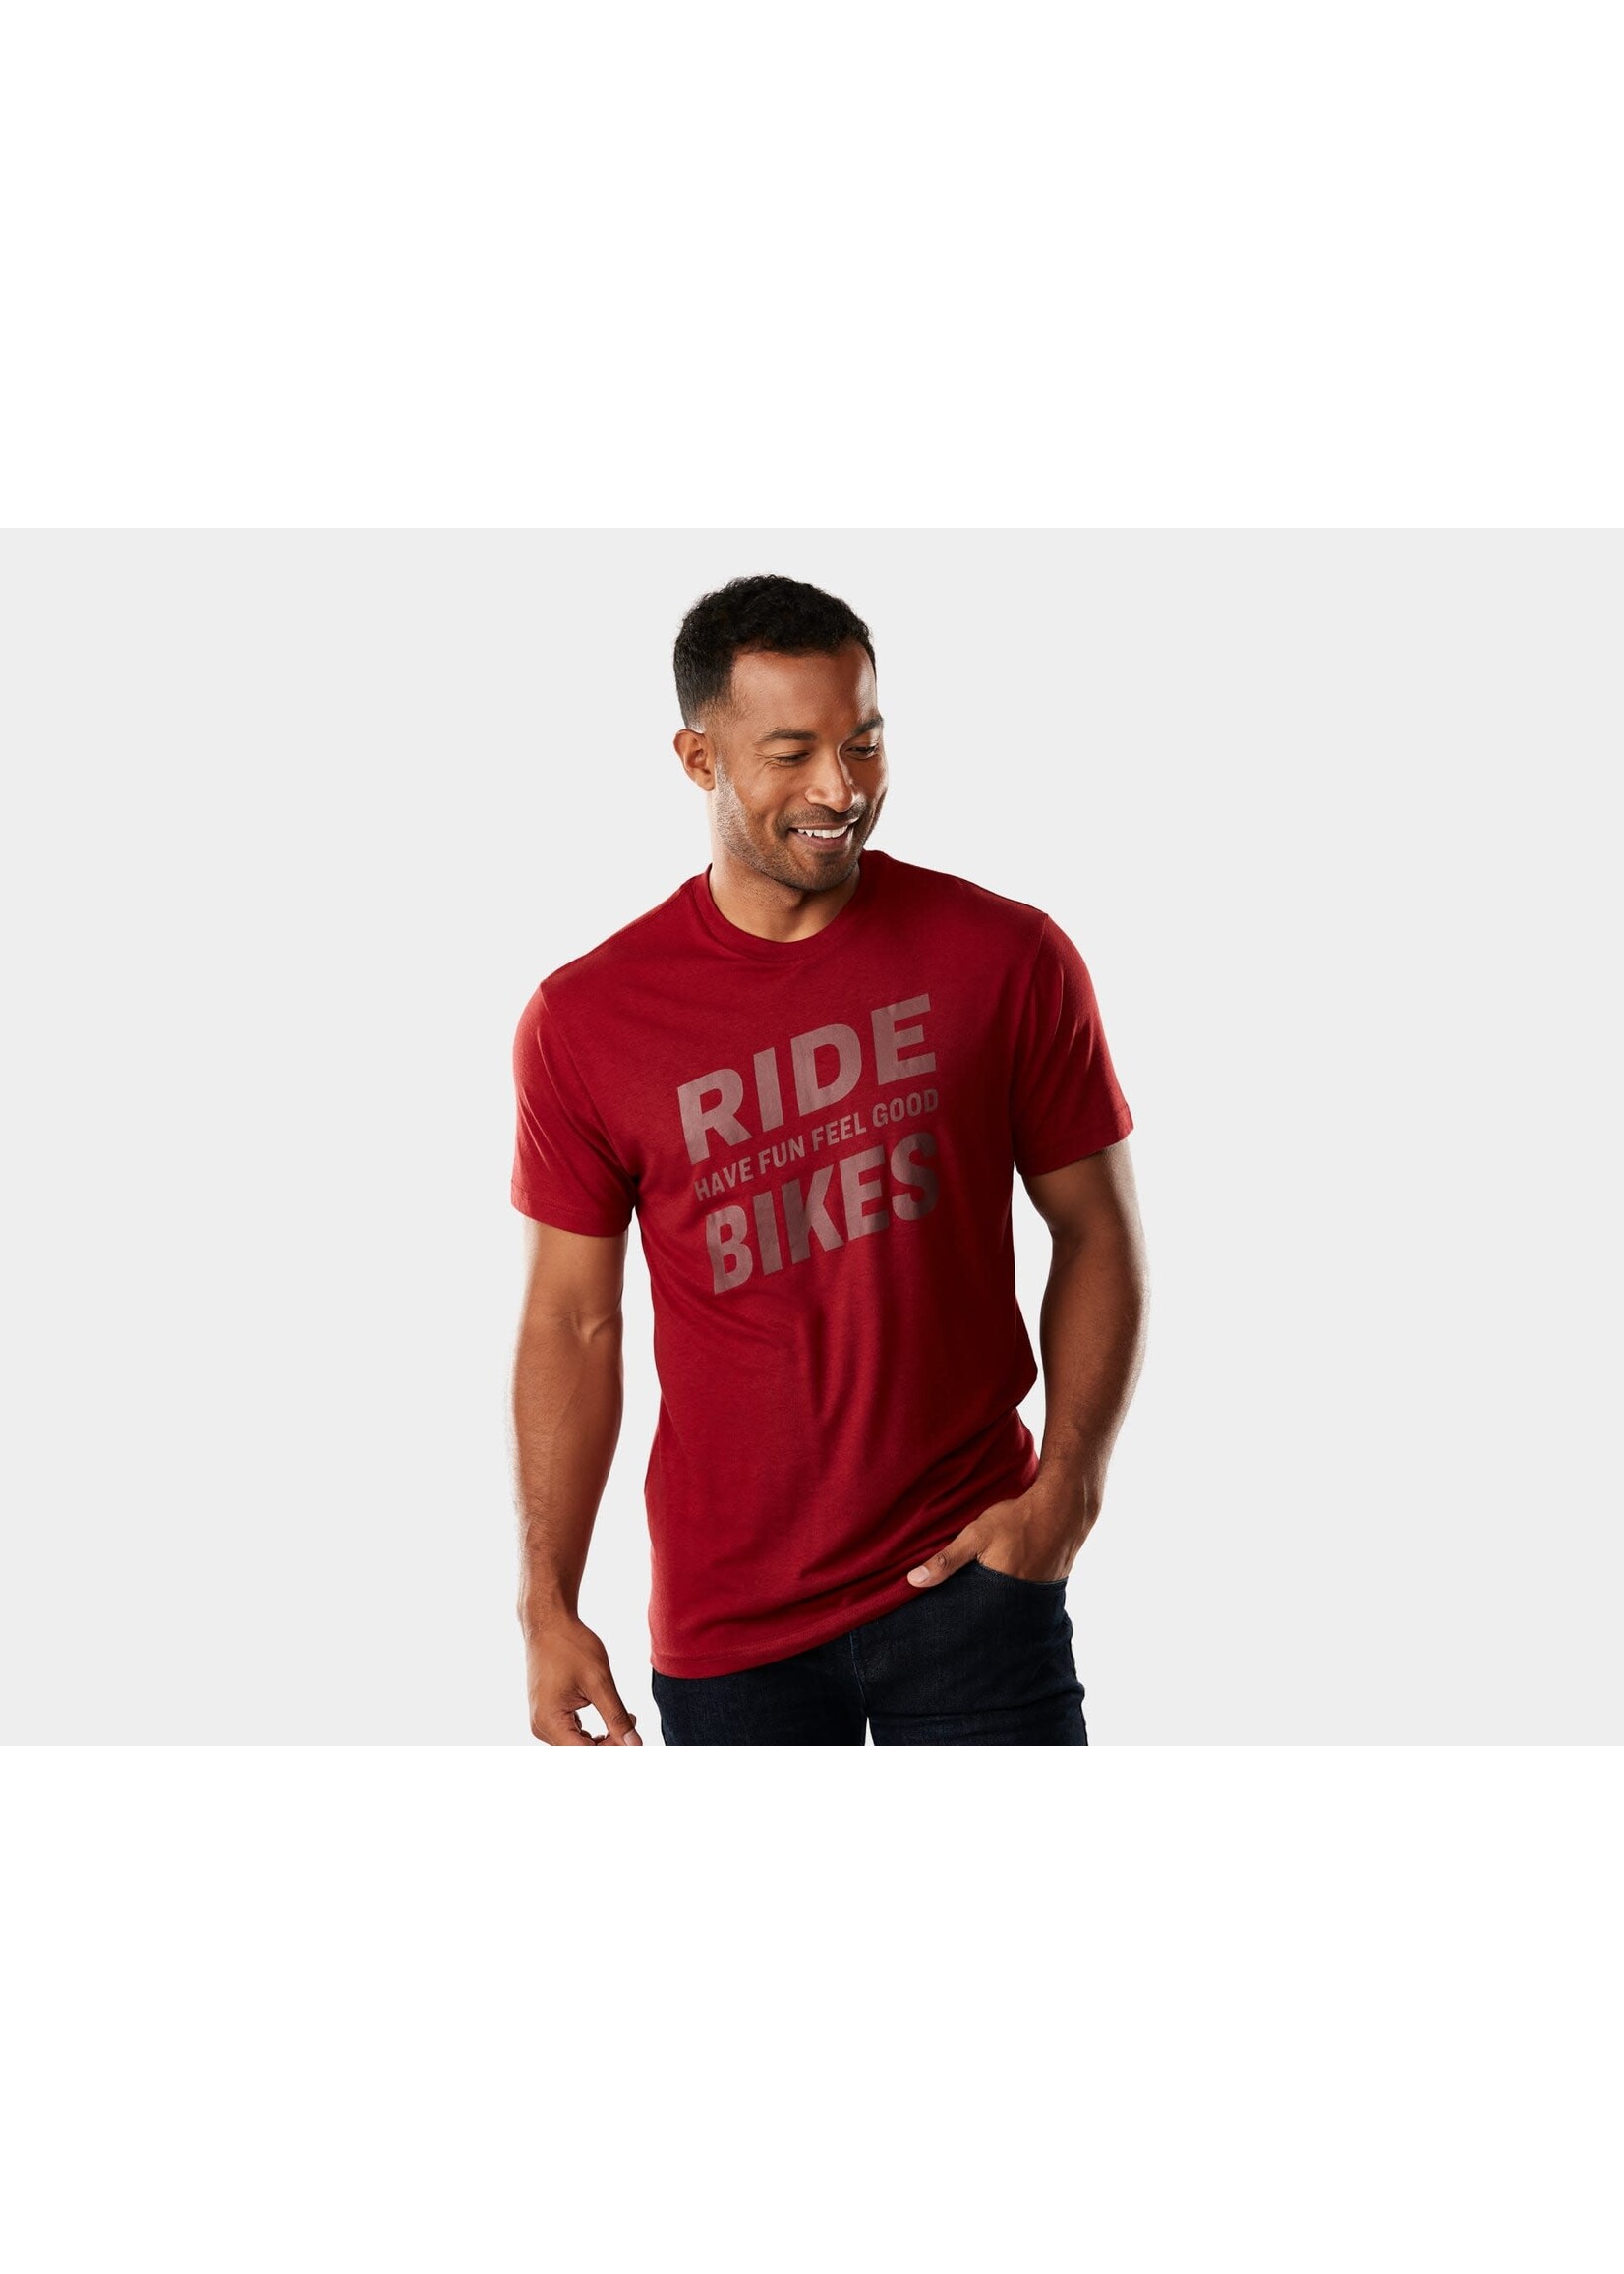 TREK Ride Bike Have Fun Feel Good Unisex T-Shirt